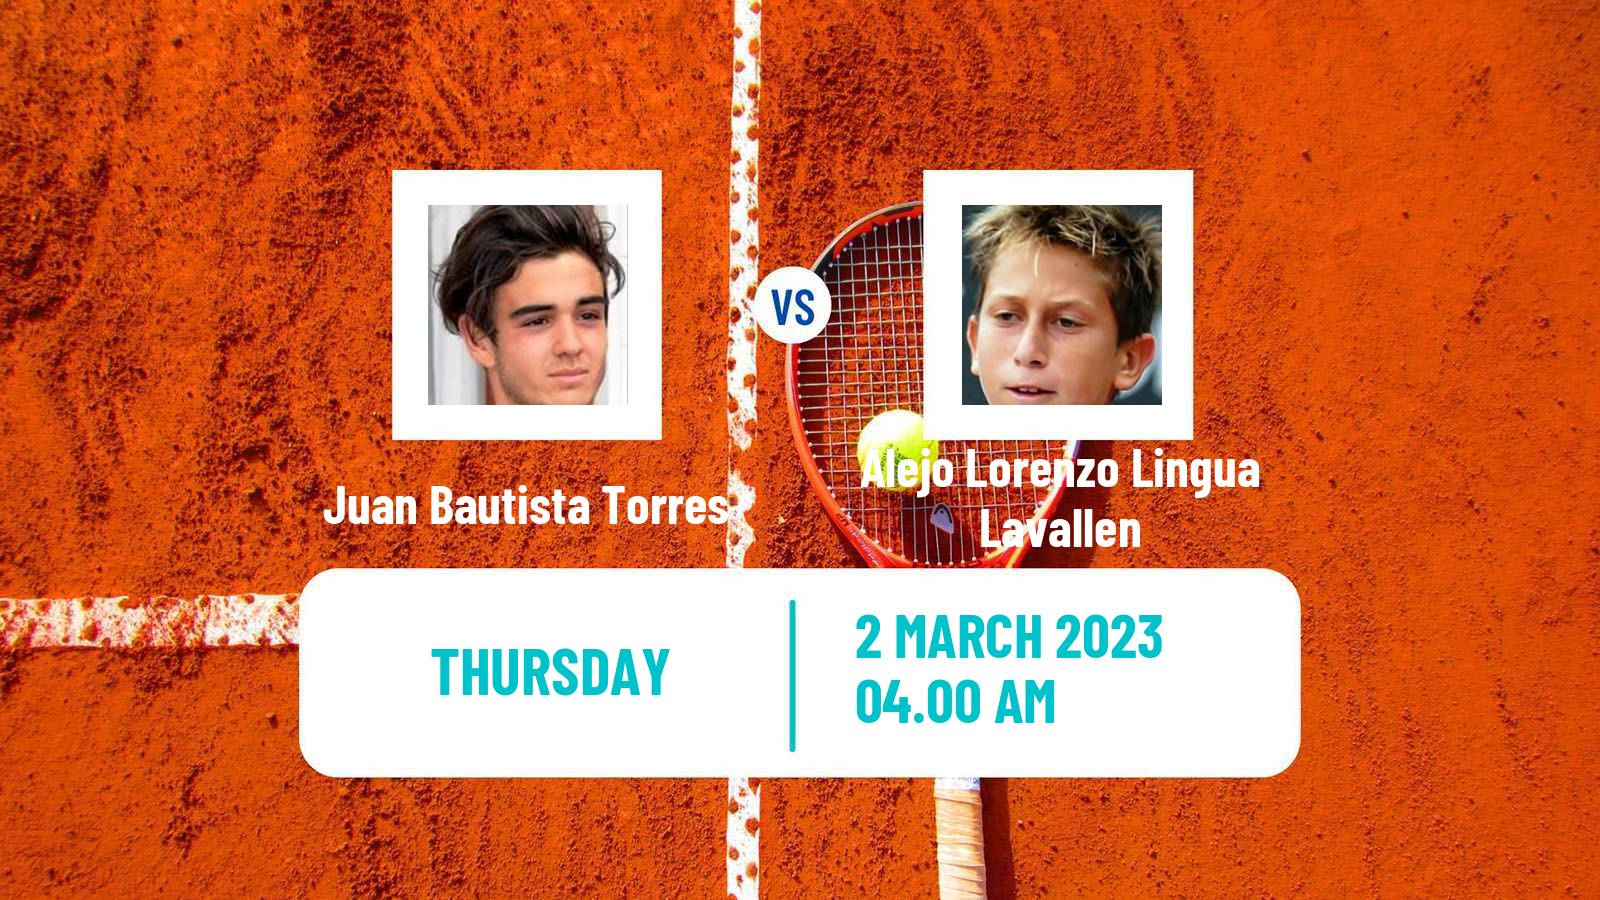 Tennis ITF Tournaments Juan Bautista Torres - Alejo Lorenzo Lingua Lavallen